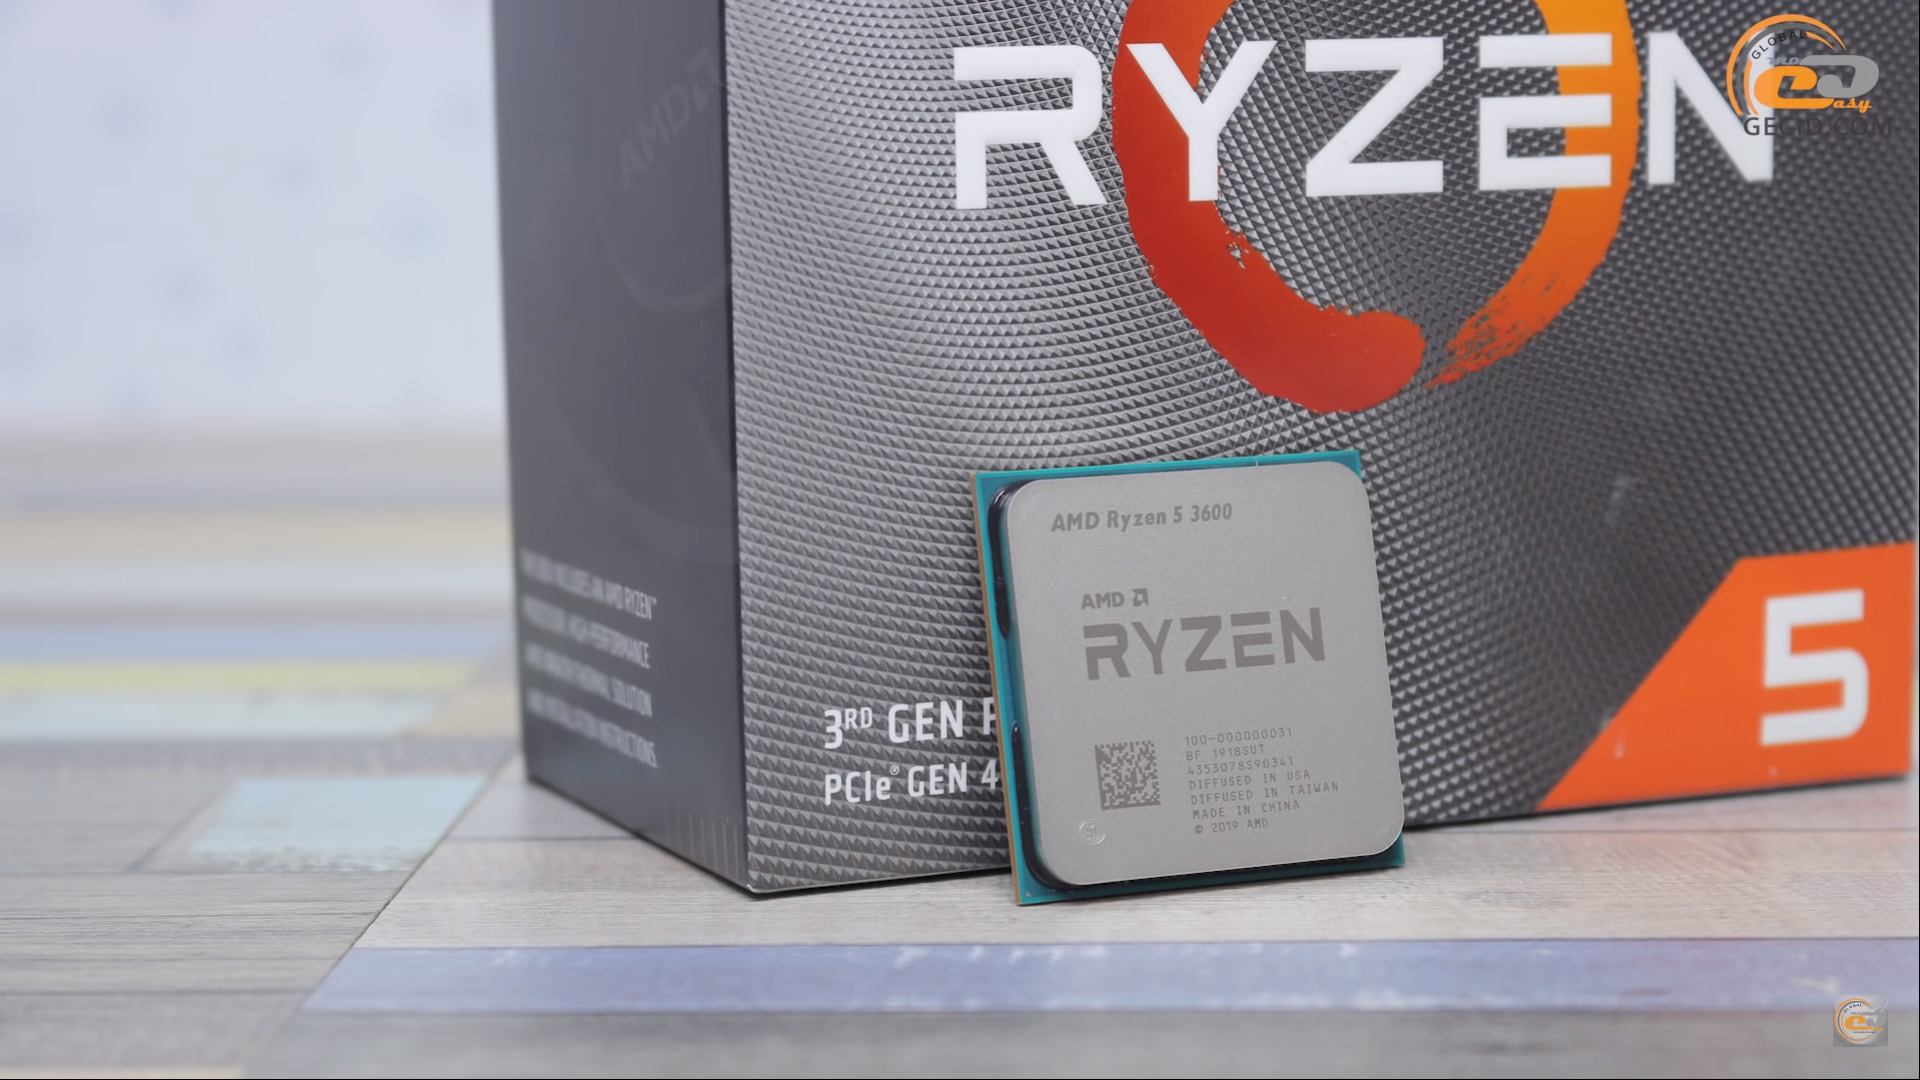 Ryzen 5 3600g. AMD Ryzen 5 3600 OEM. Процессор AMD Ryzen 5 3600, (100-100000031awof) Box. AMD Ryzen 5 3600 Box. АМД райзен 5.